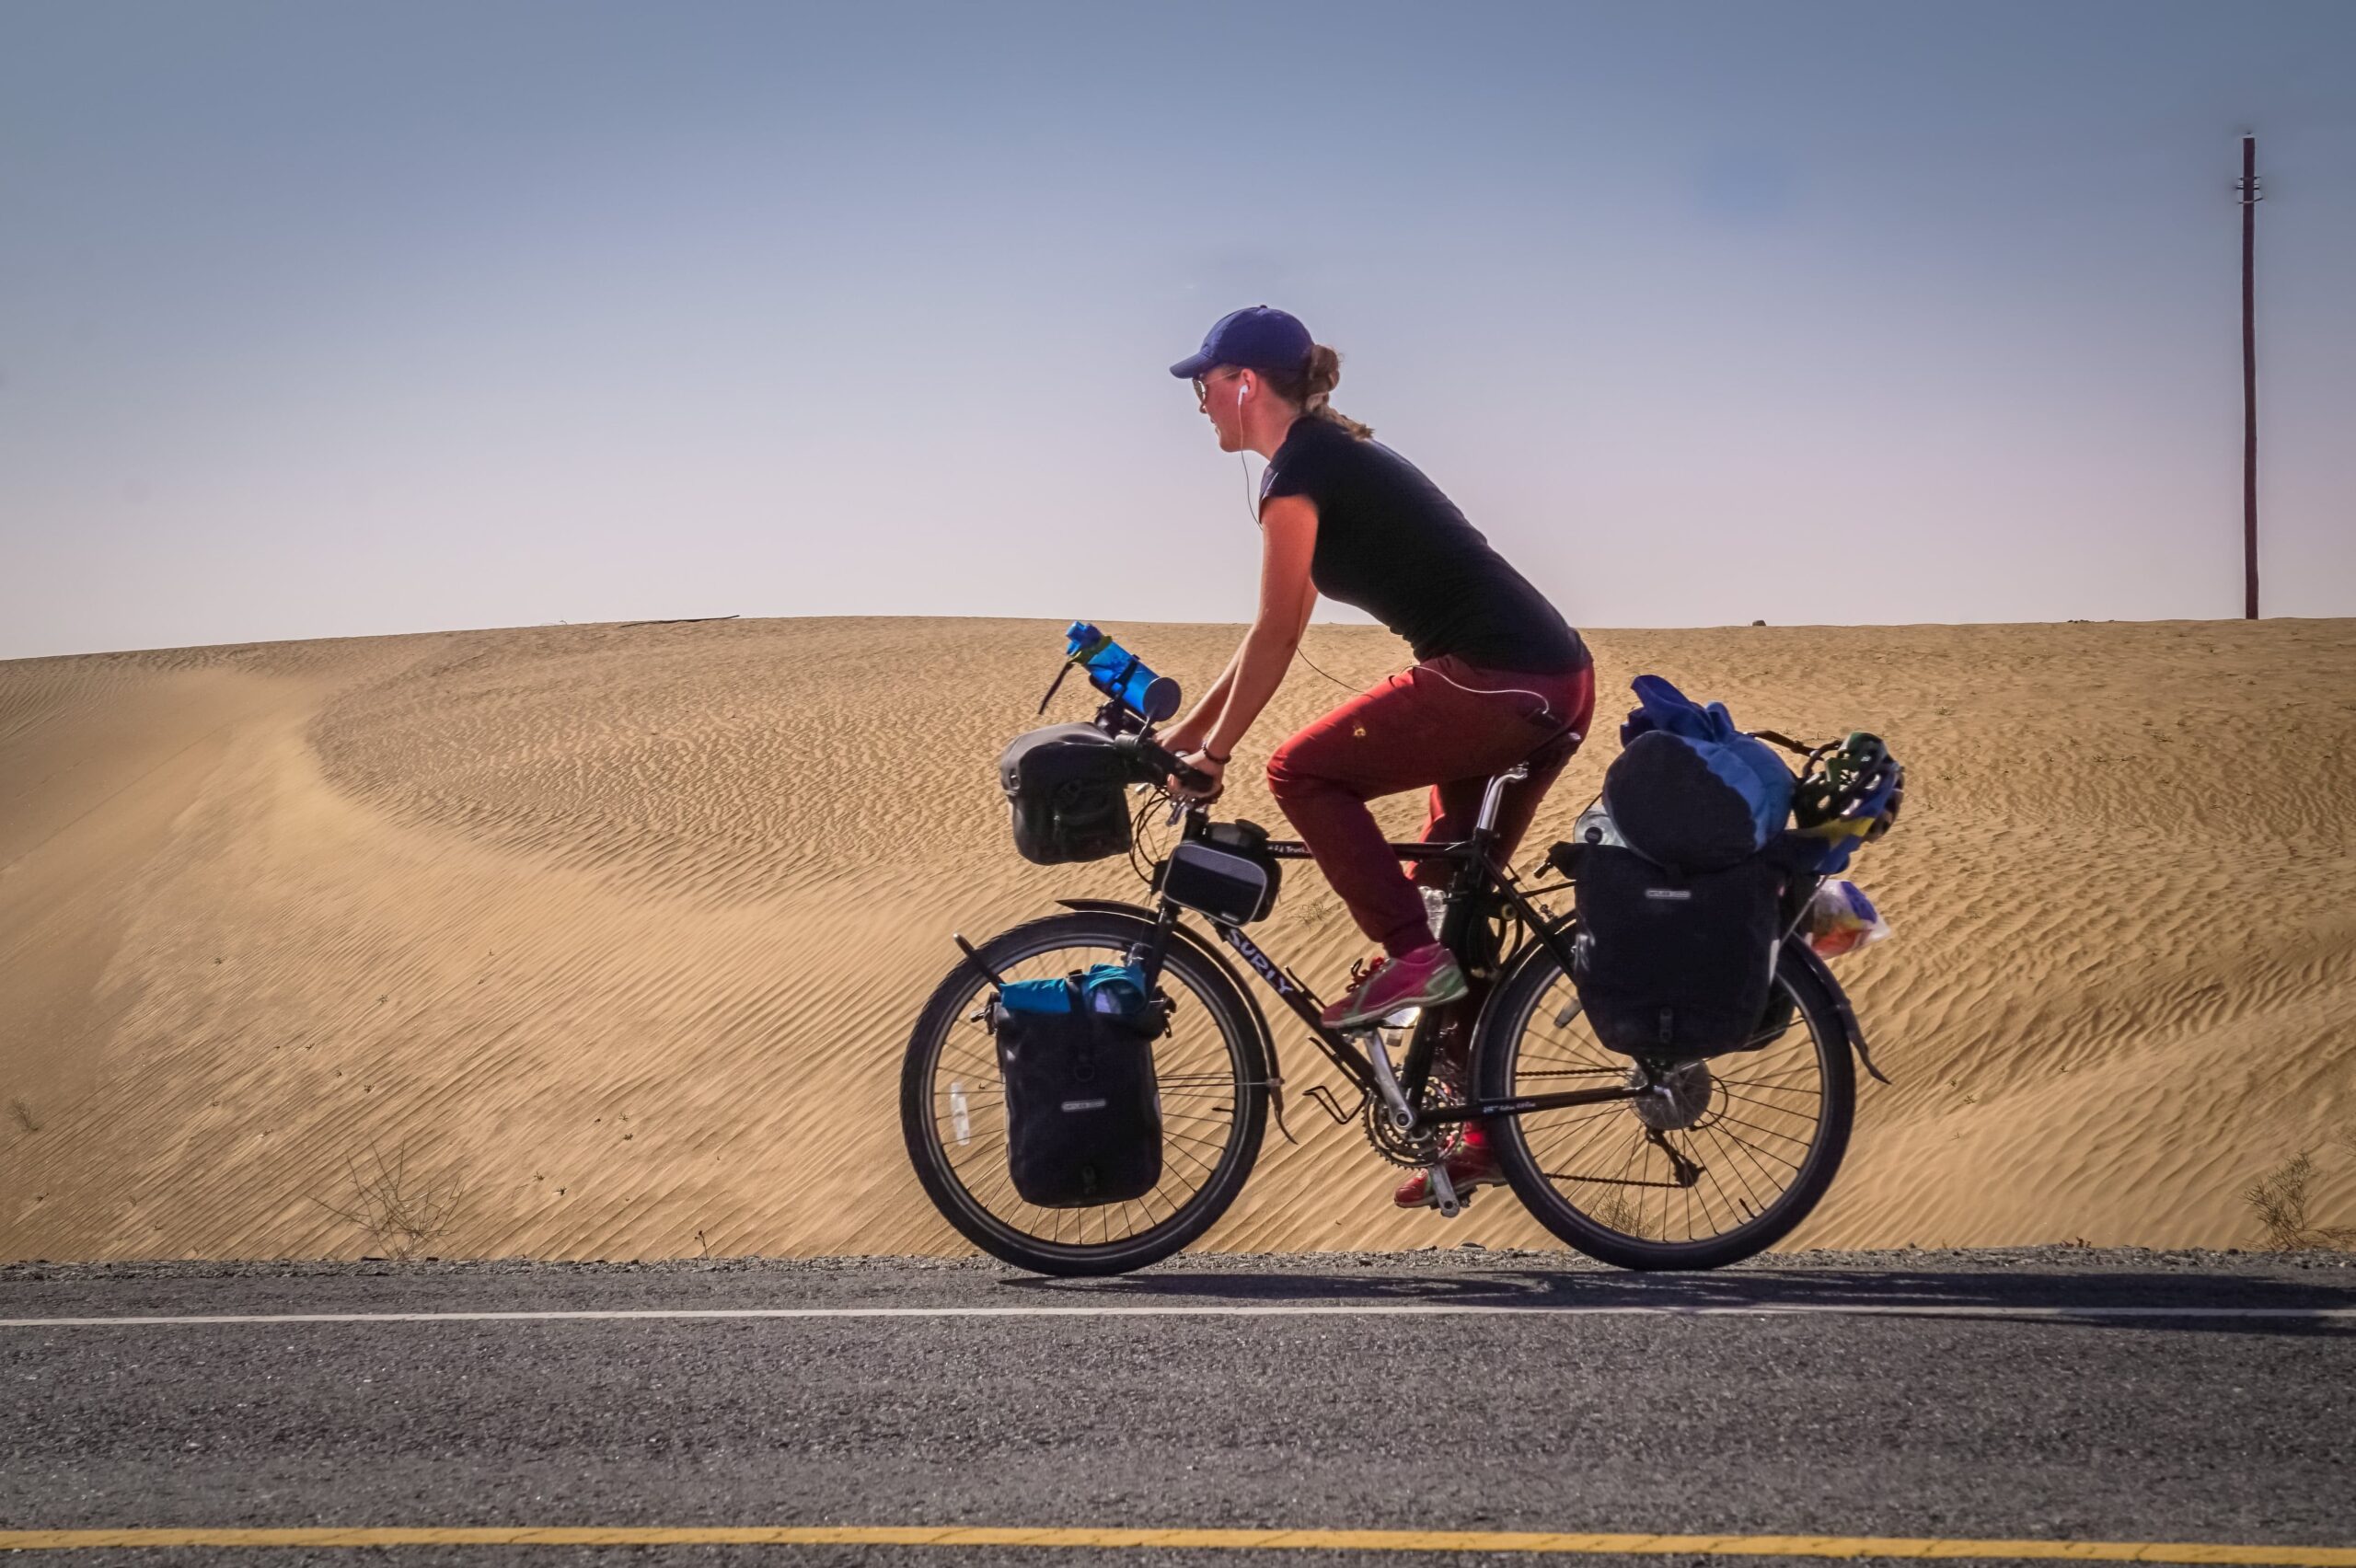 Around the world on two wheels - Fredrika Ek's solo bike journey